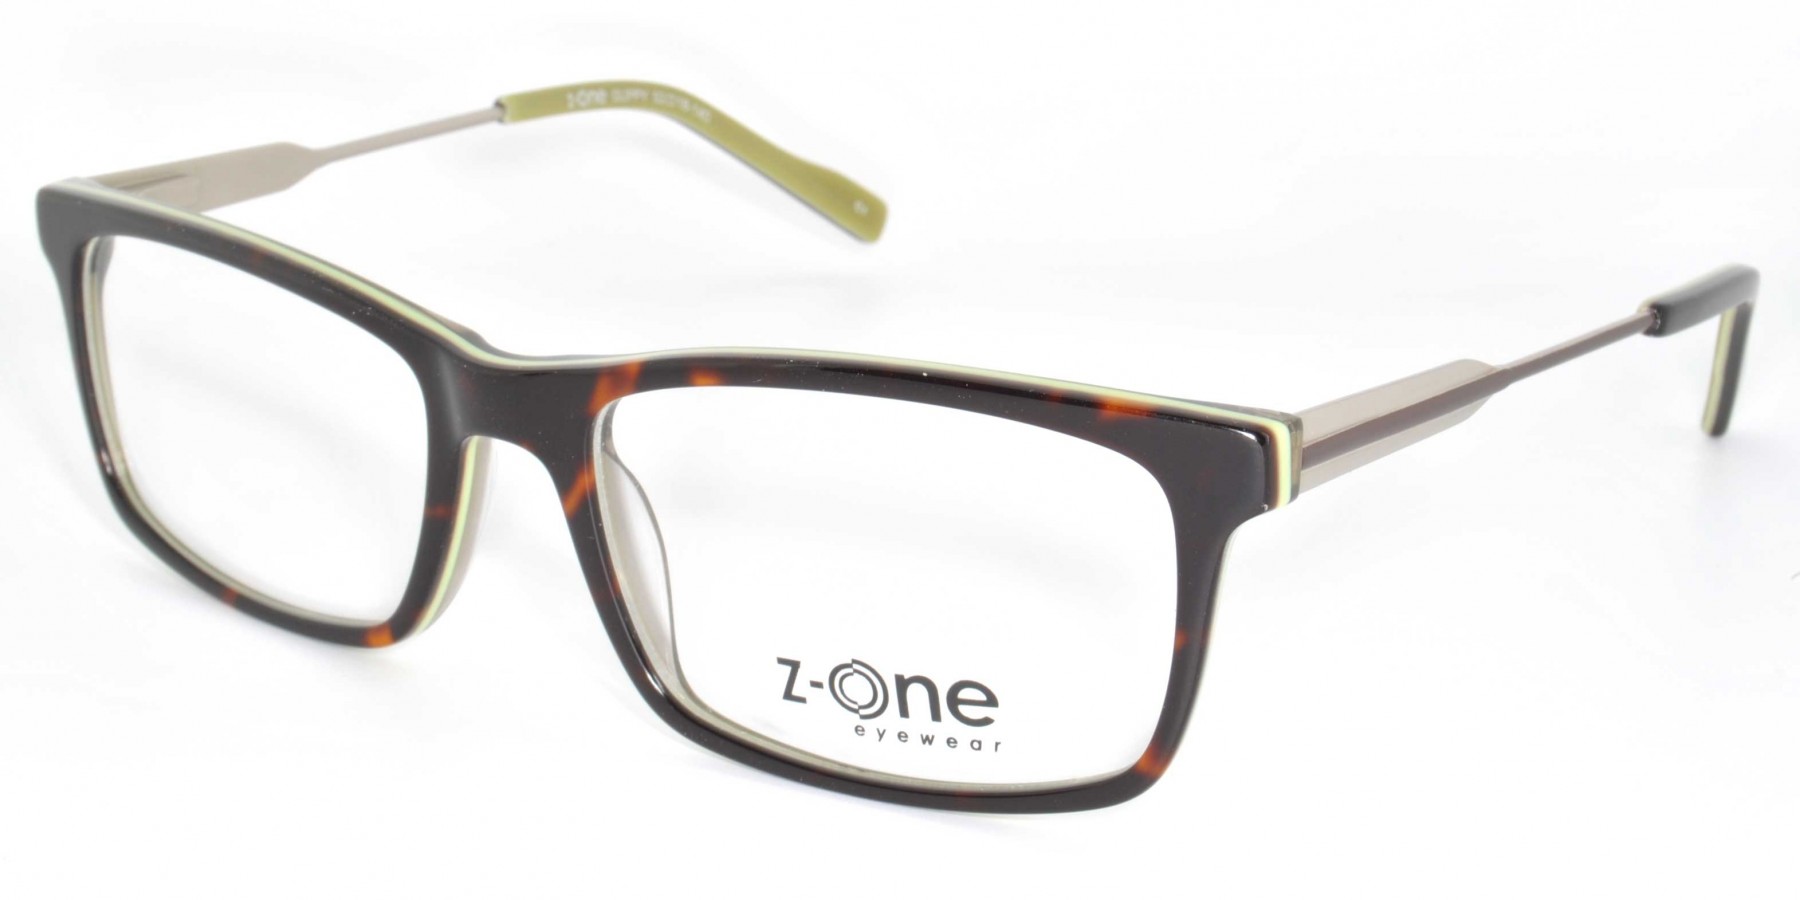 Z-One Guppy Prescription Glasses